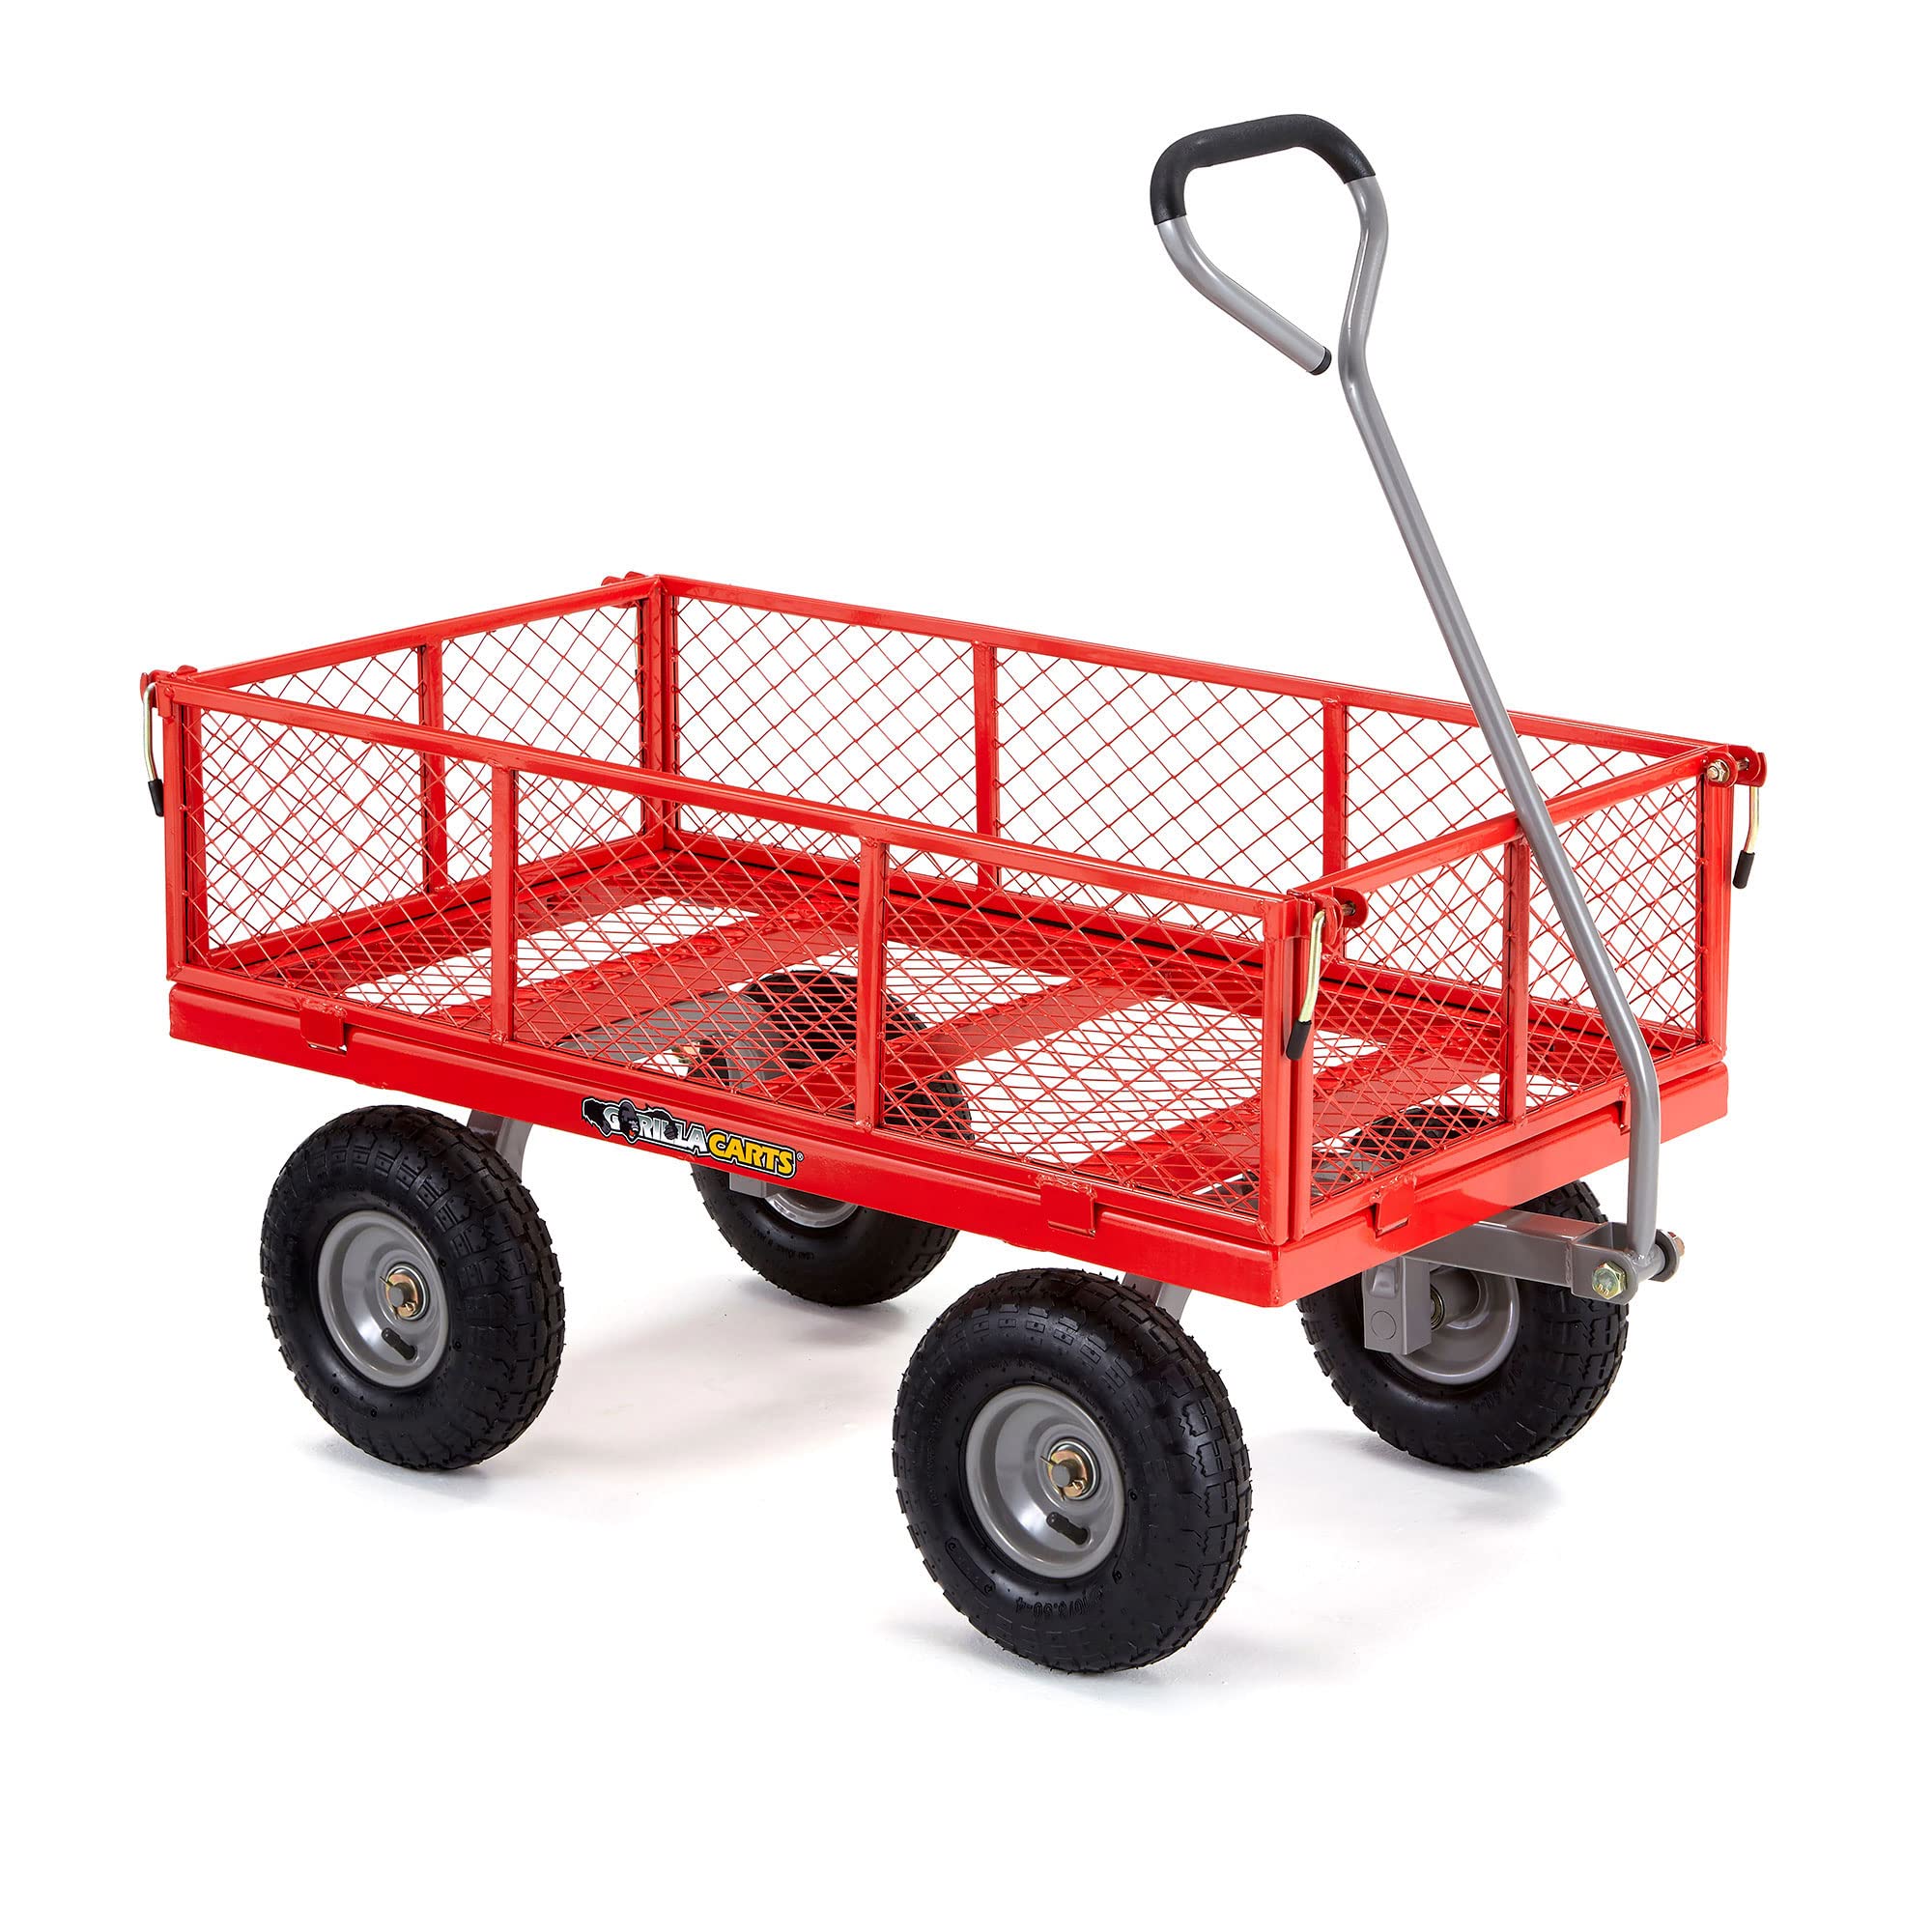 Gorilla Cart 800 Pound Heavy Duty Durable Steel Mesh Convertible Flatbed Wagon Cart $92.47 + Free Ship